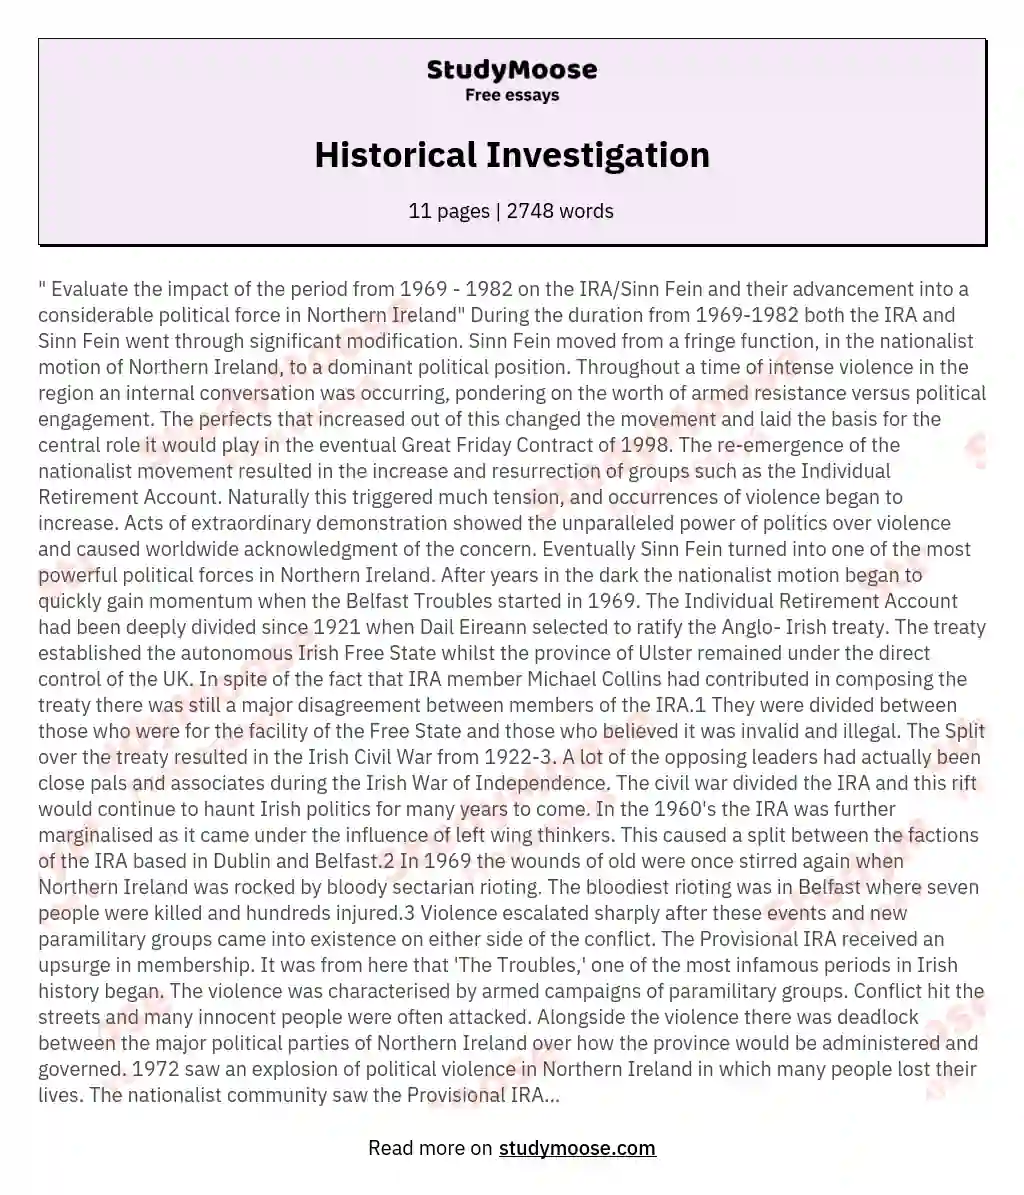 Historical Investigation essay